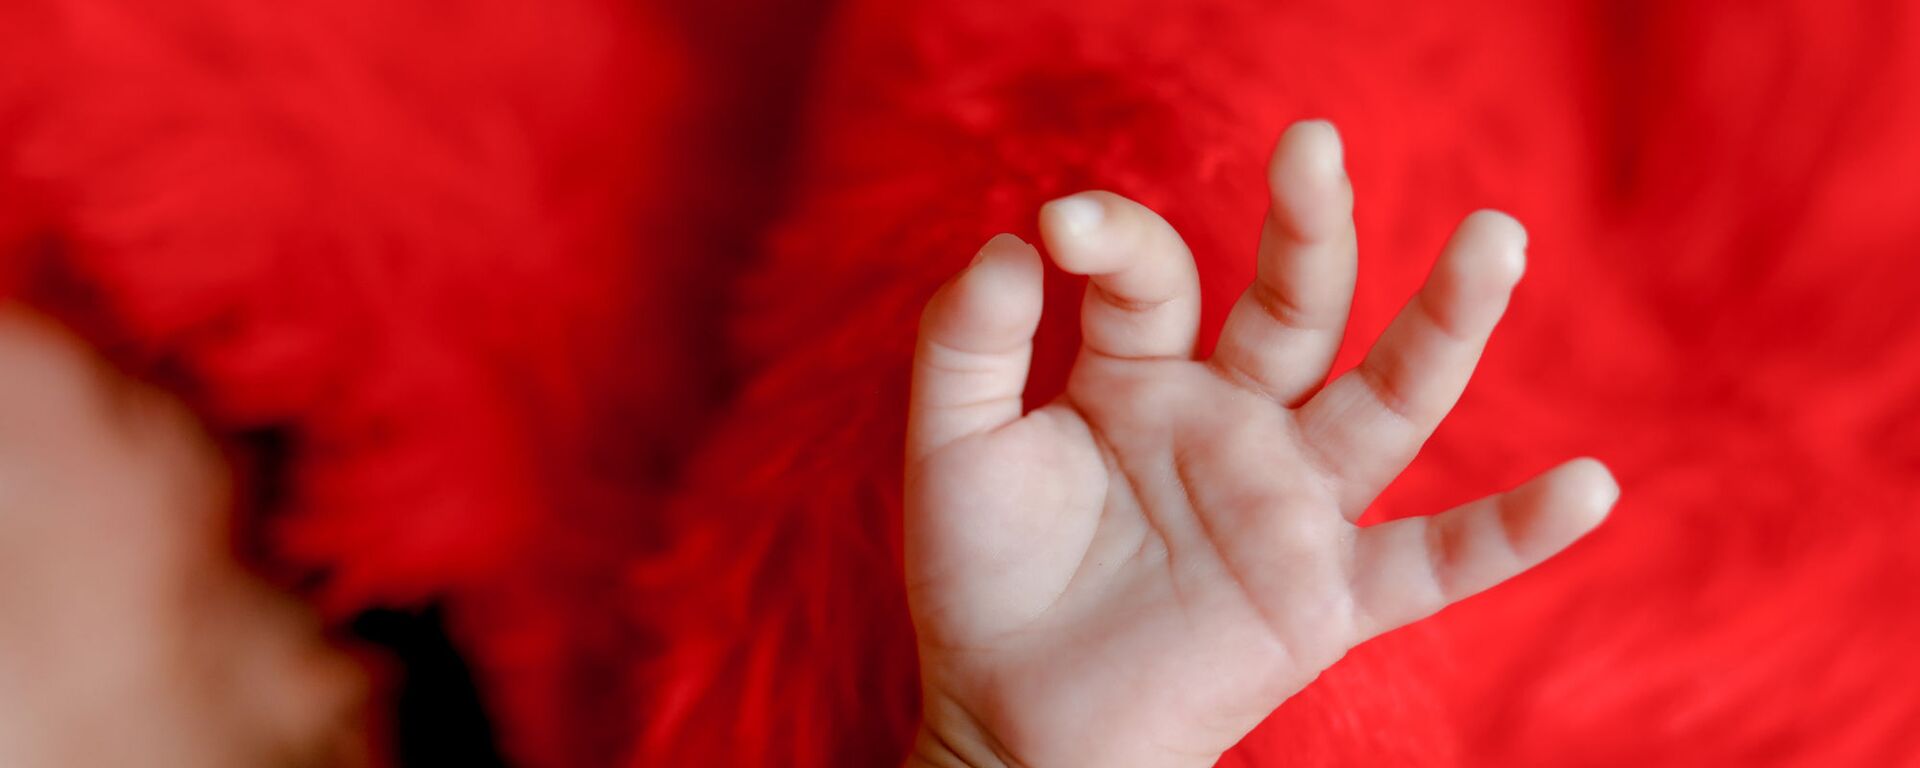 Рука младенца на красном фоне - 俄羅斯衛星通訊社, 1920, 27.09.2021